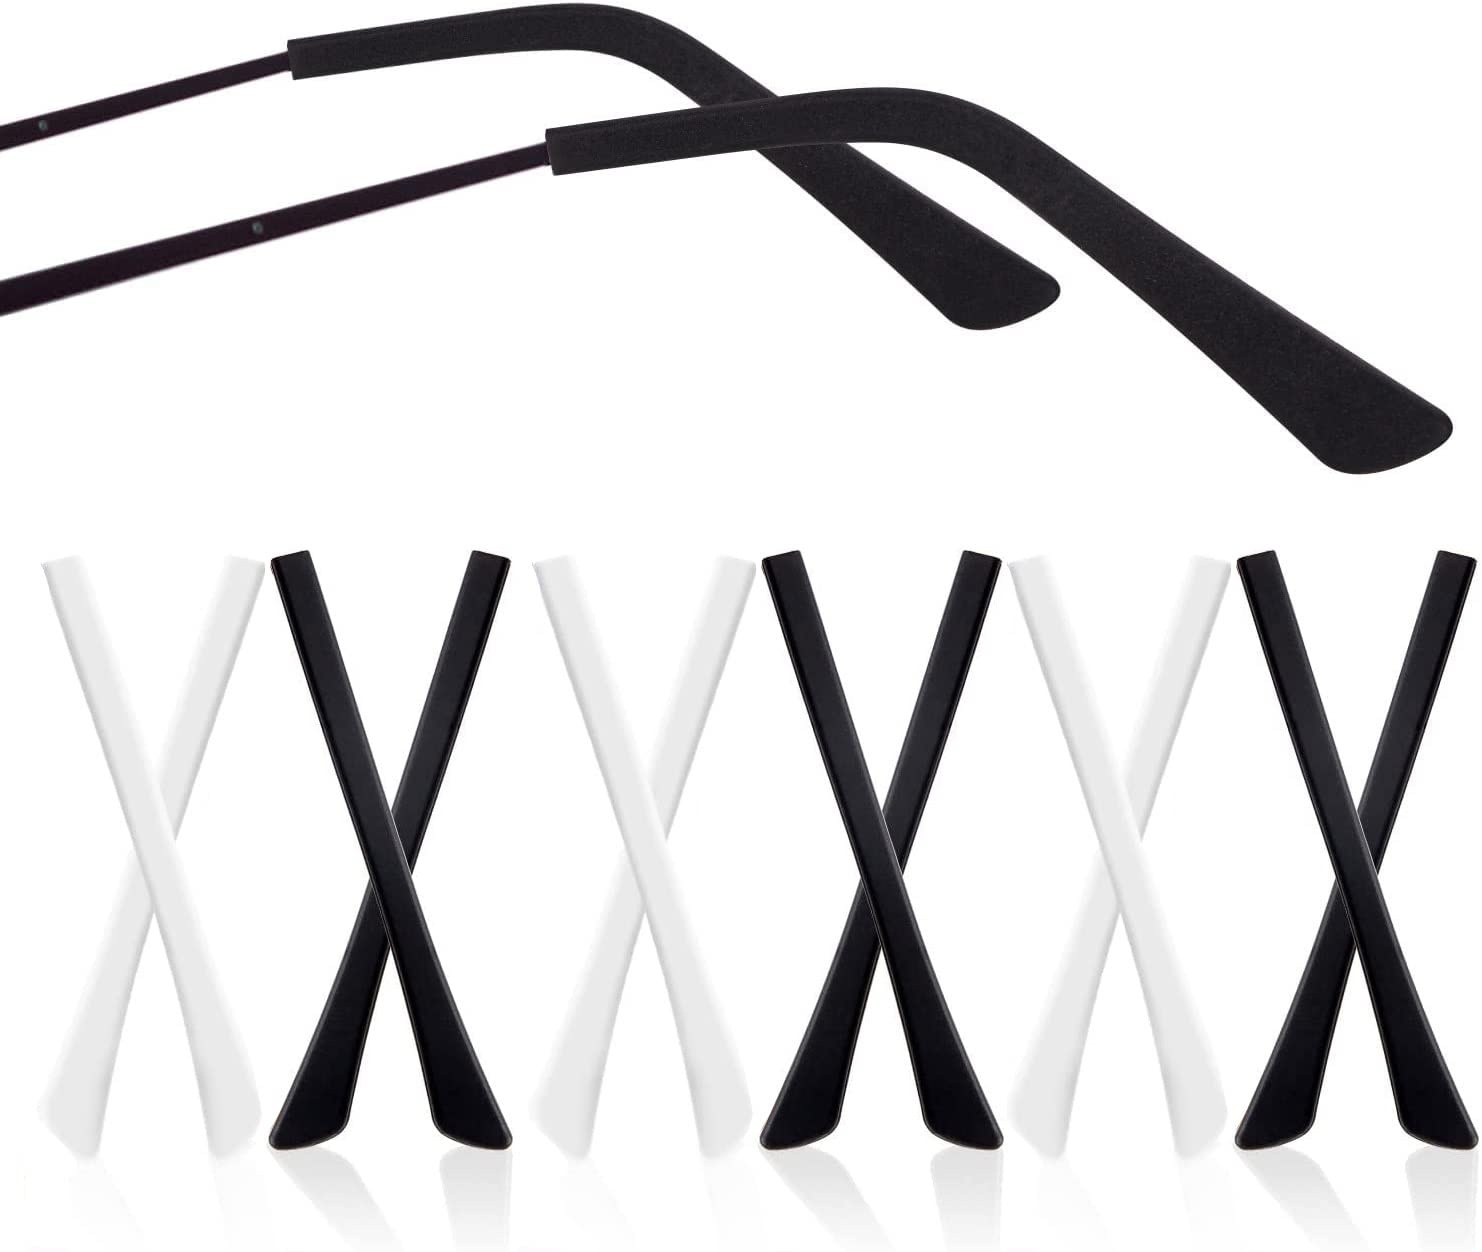 Eyeglass End Tips, 10 Paar Silikon Anti-Rutsch-Ohrstrümpfe Stücke Tube Sleeve Eyewear Soft Replacement Tips ONLY for Thin Slim Wire Eyeglass Sunglasses Legs Black White ...